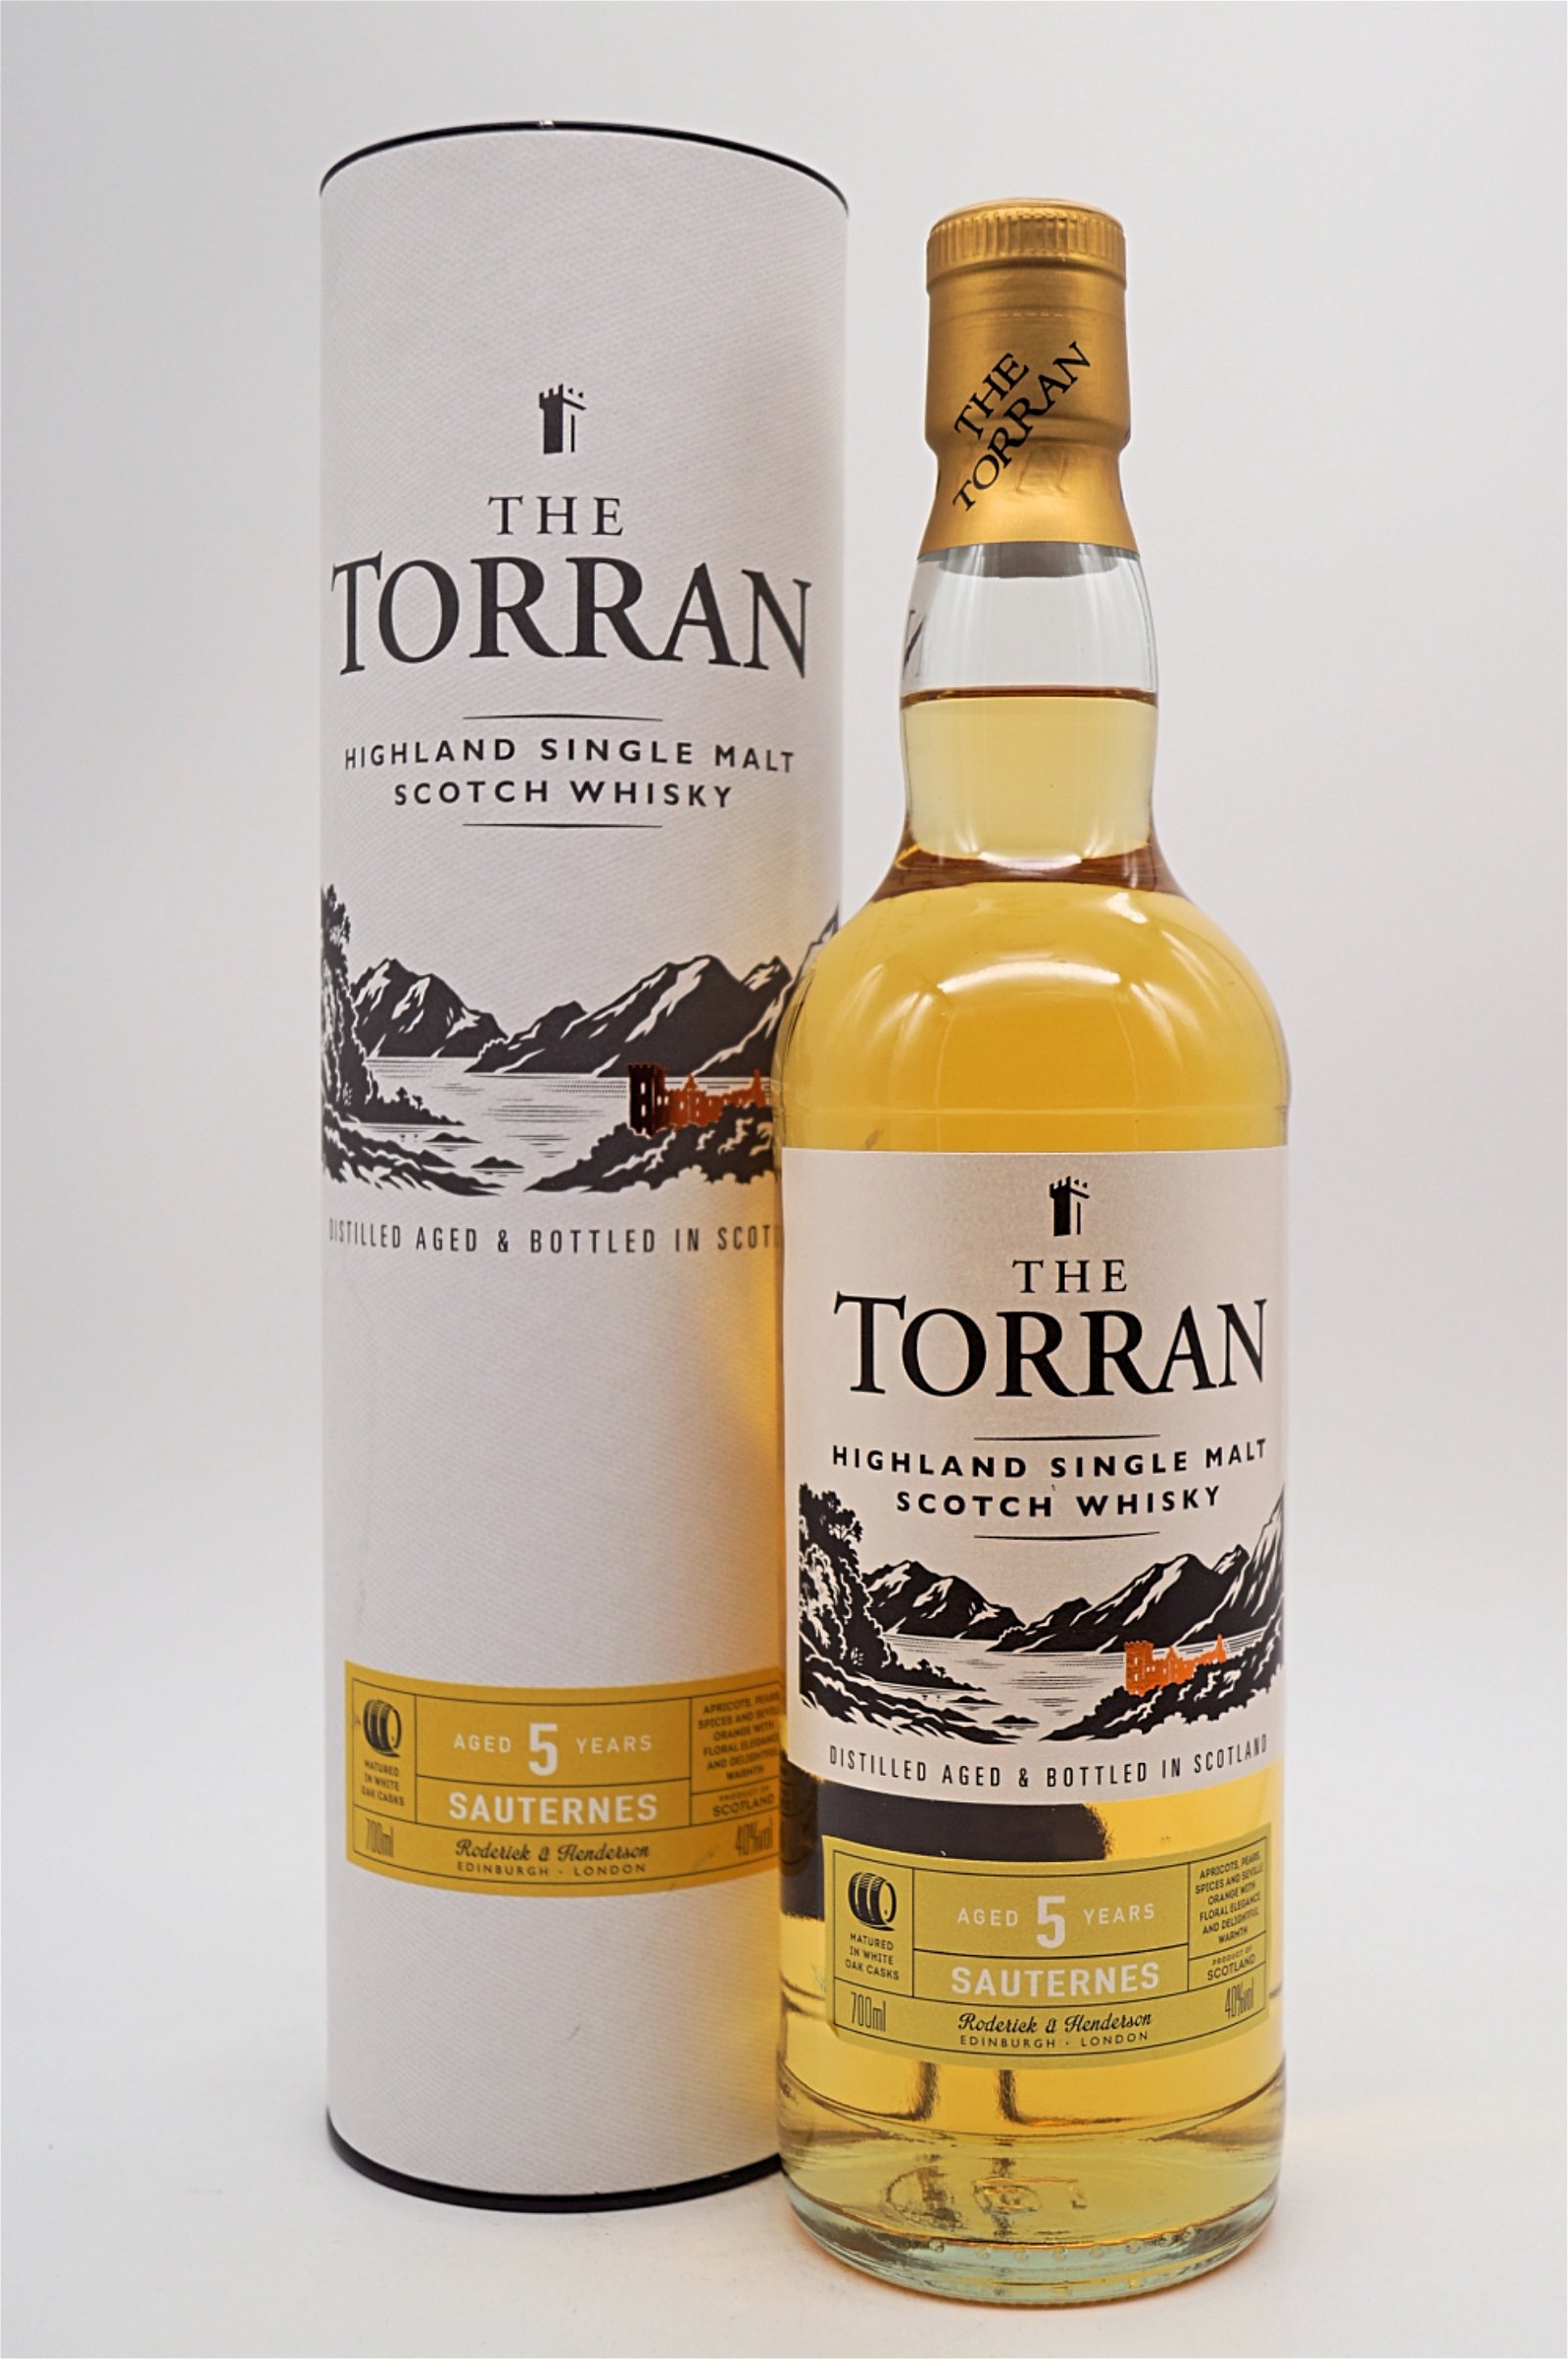 The Torran Sauternes Cask Finish Highland Single Malt Scotch Whisky